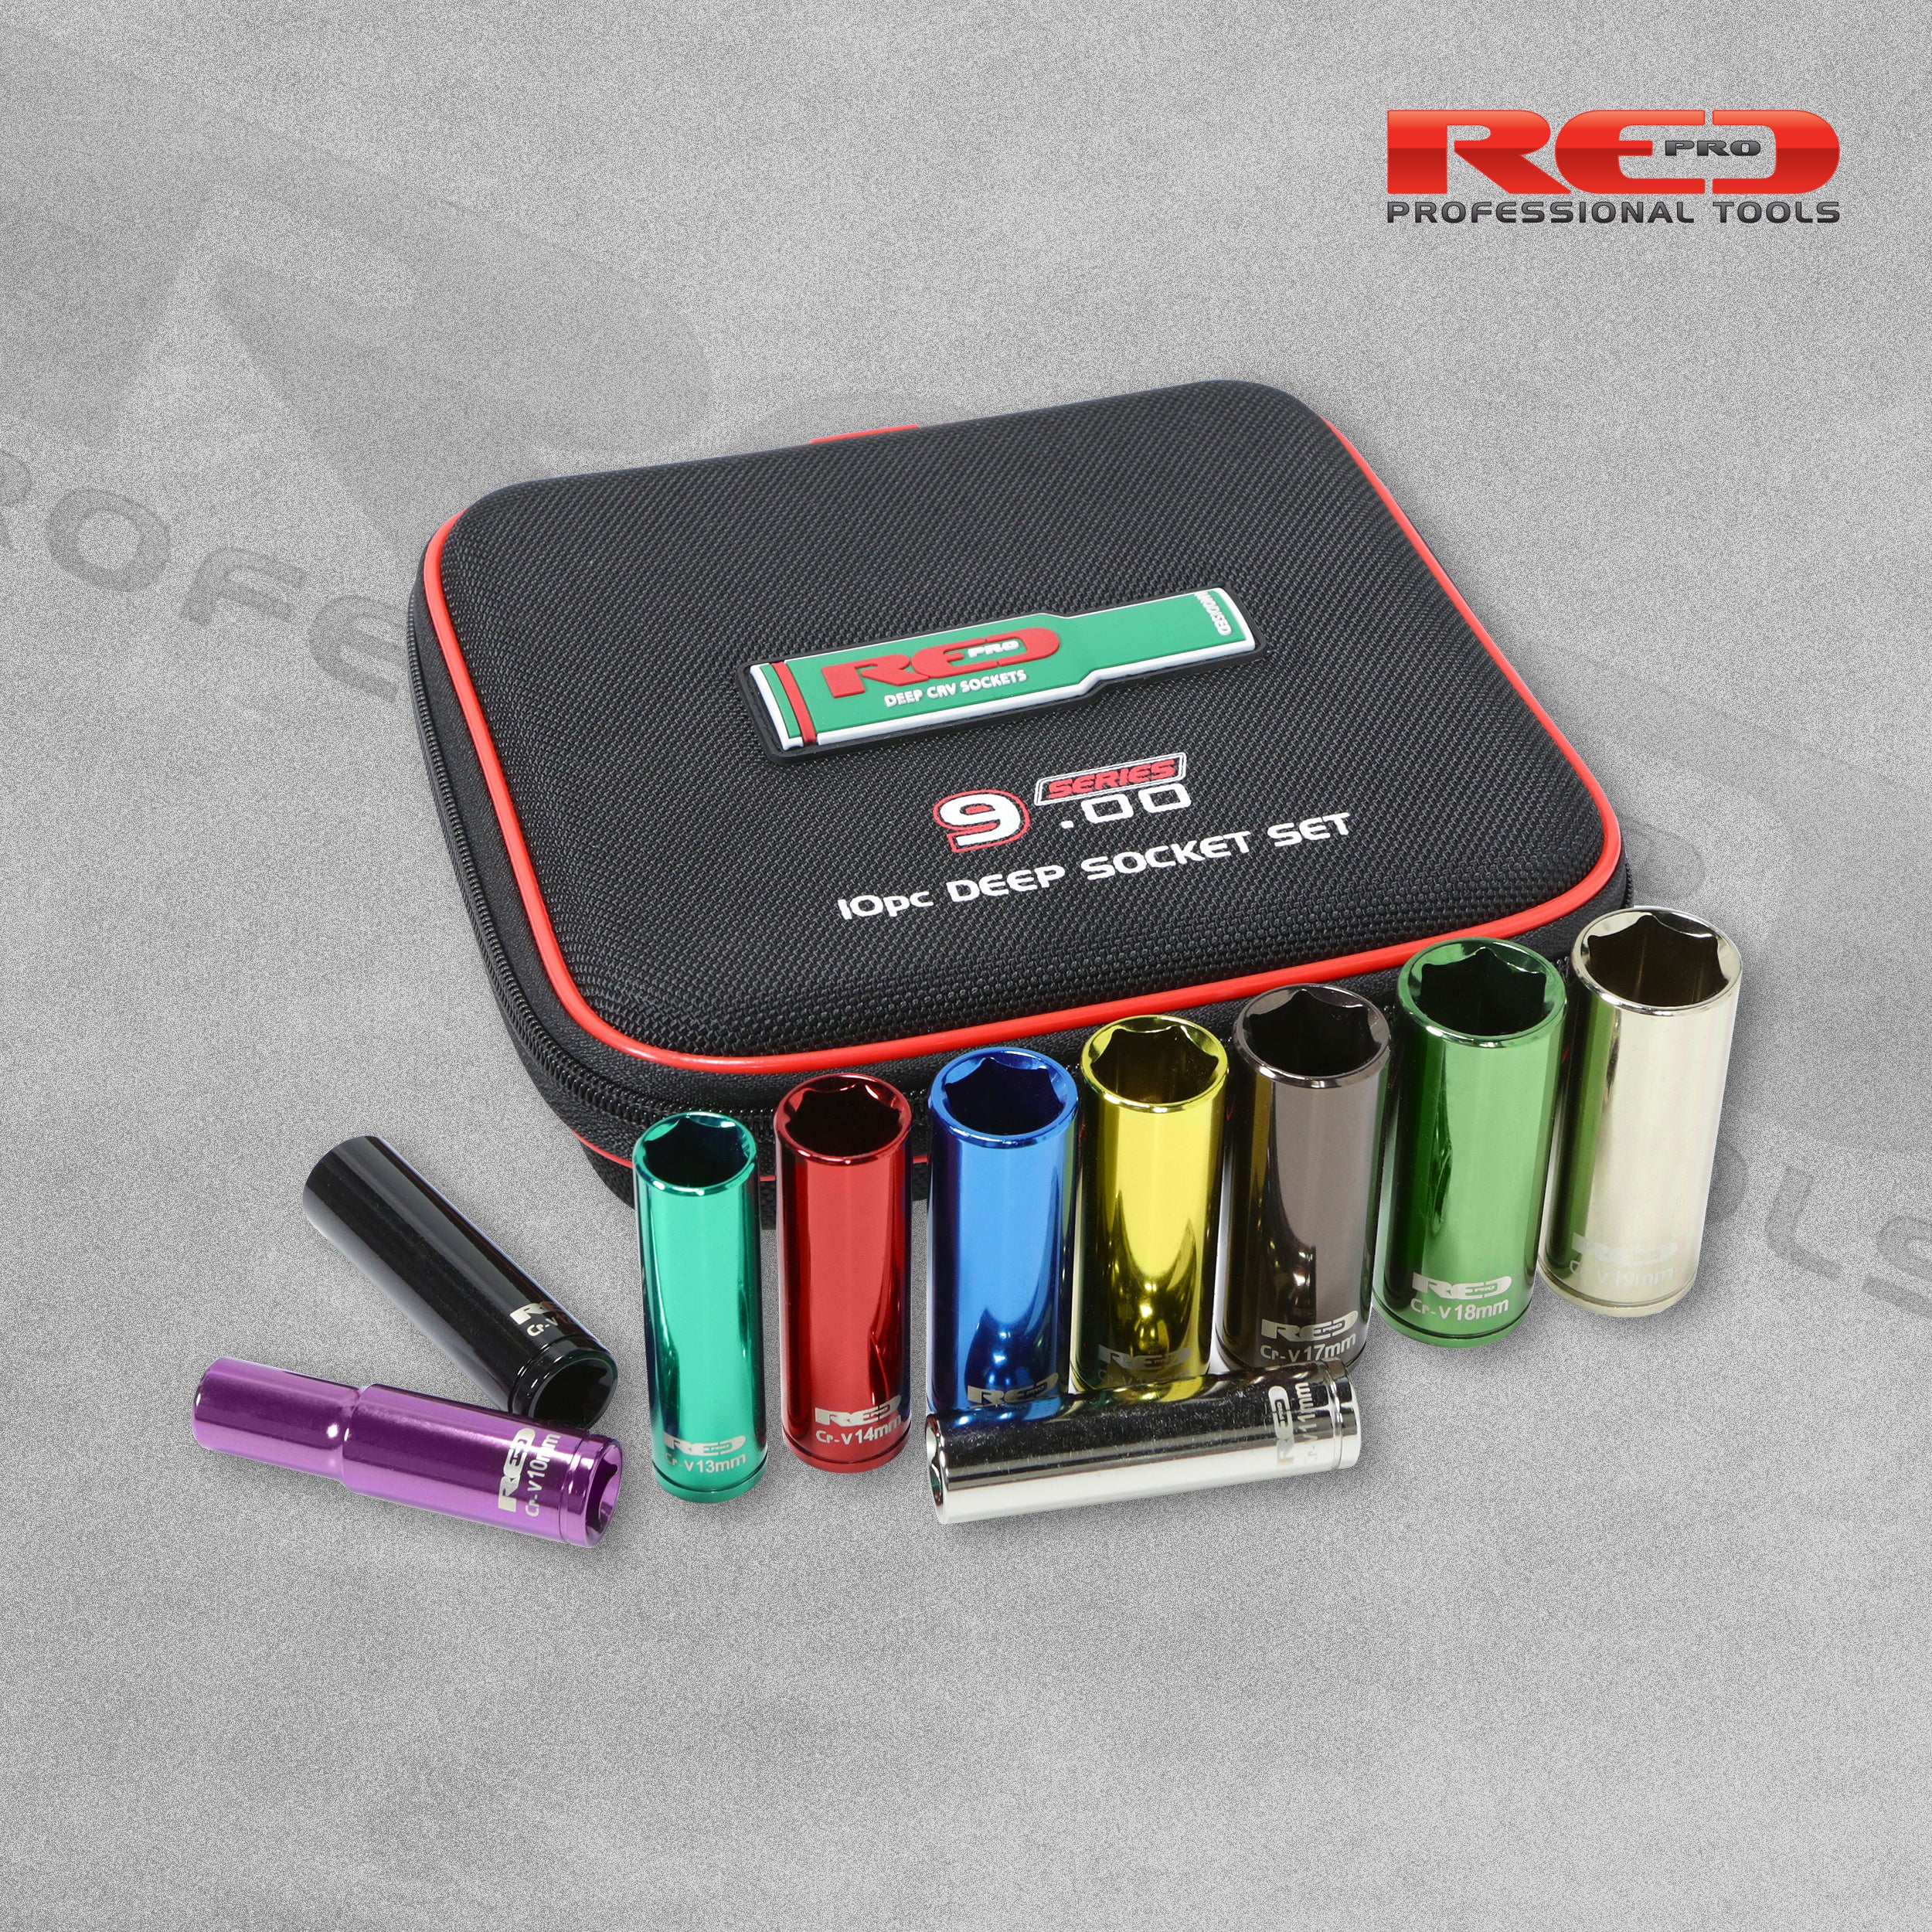 Red Pro Tools 10pc Deep Socket Set 3/8" Drive (9.00 Series)